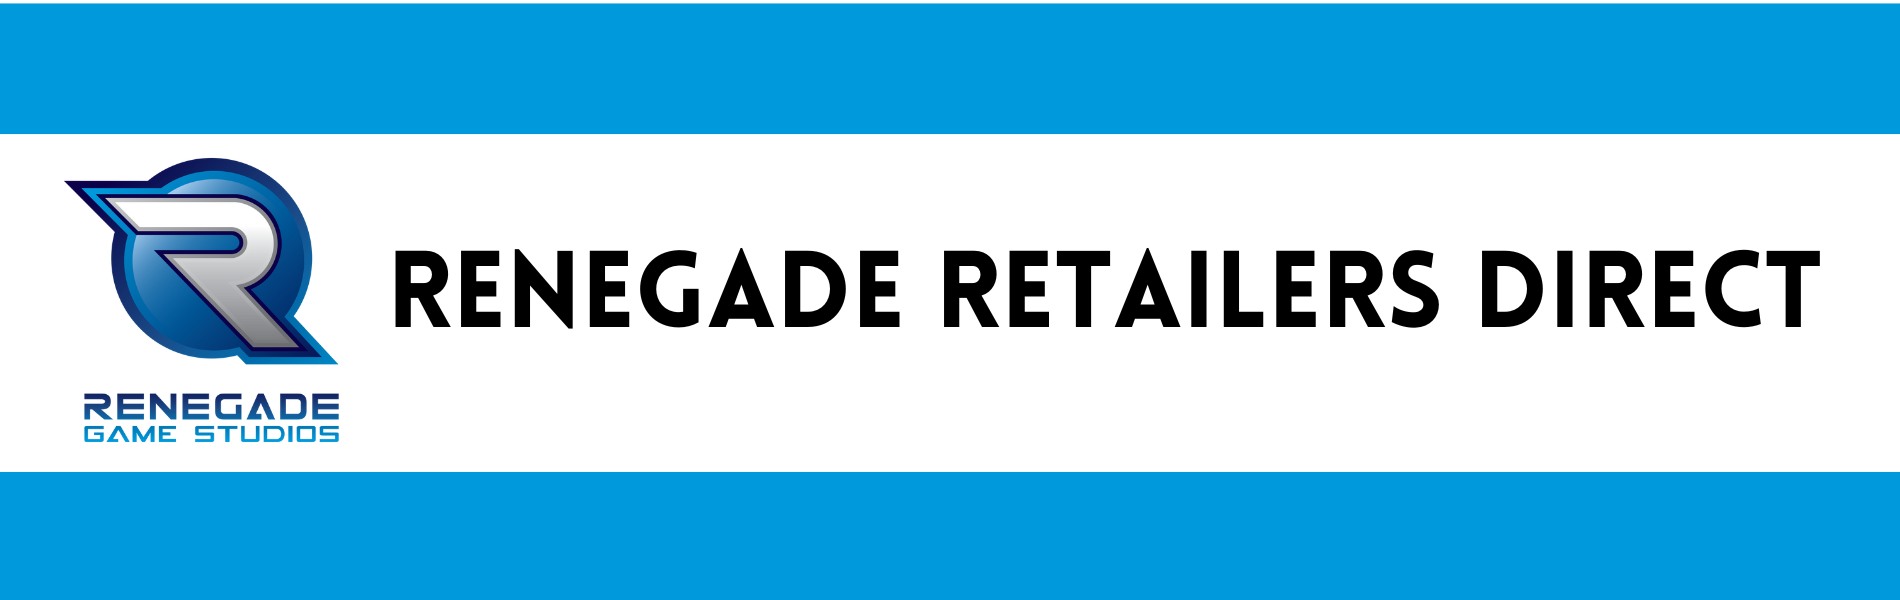 renegade-retailers-direct